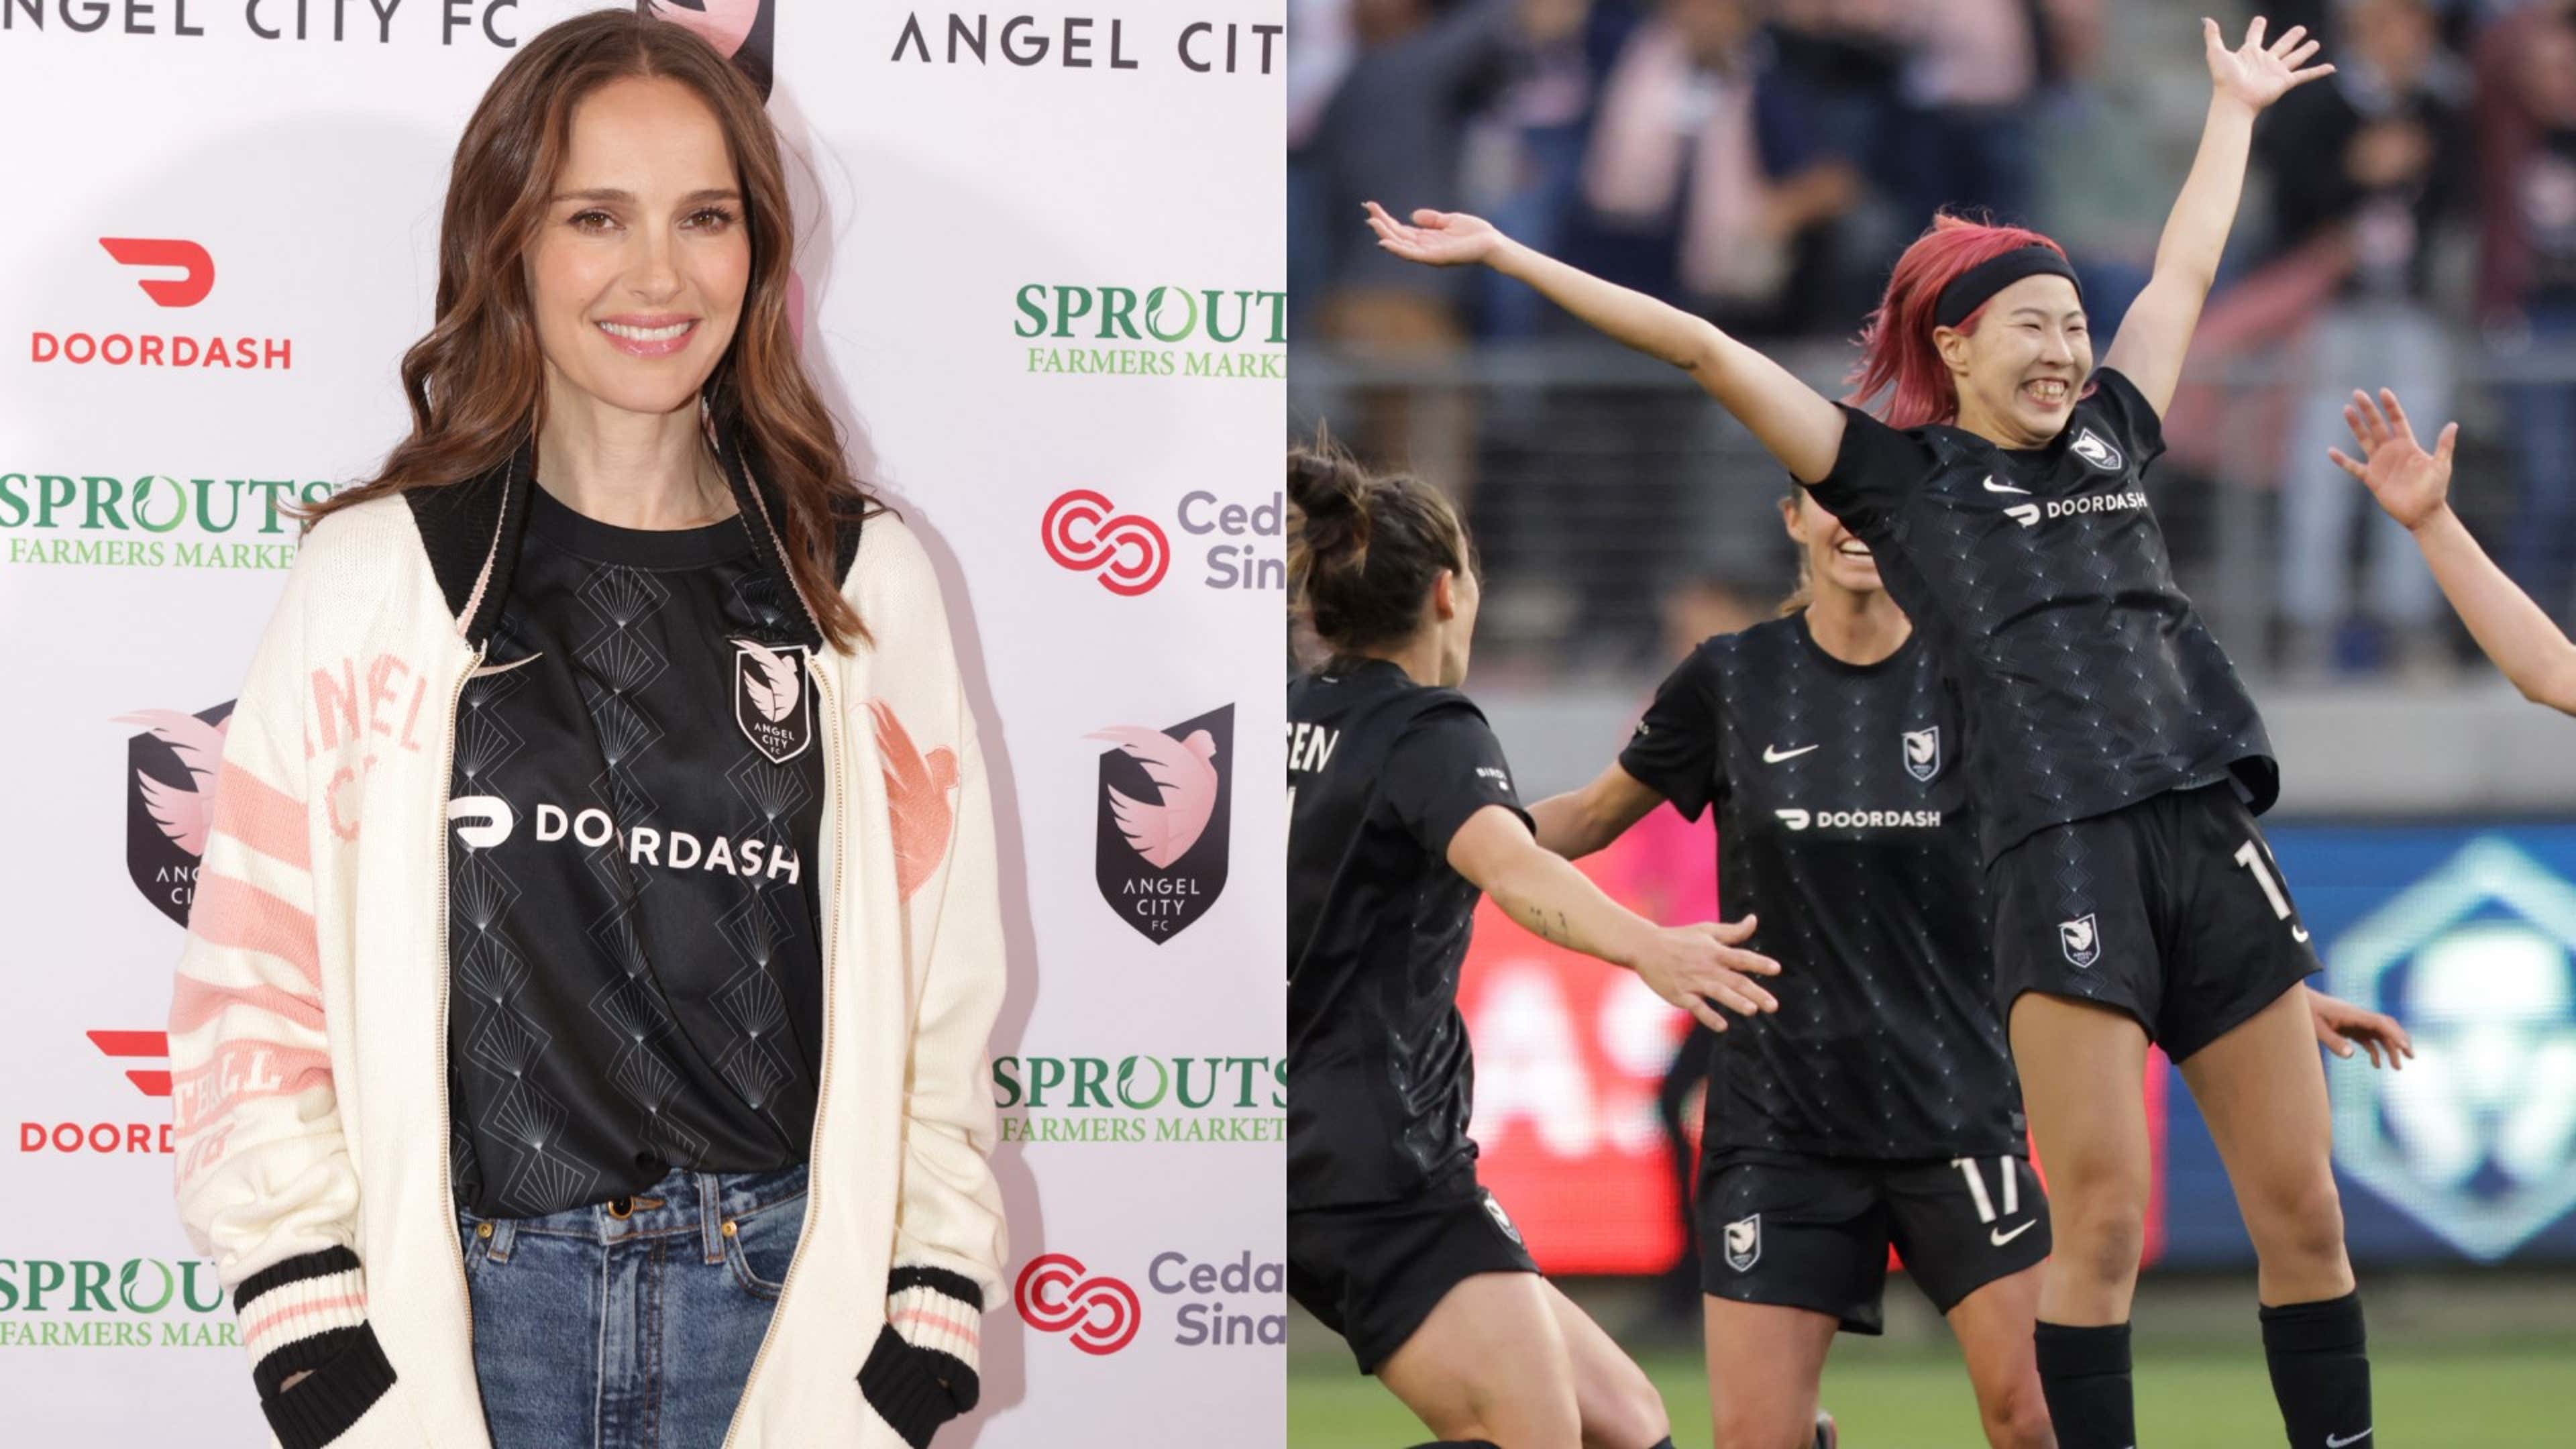 Angel City FC Natalie Portman